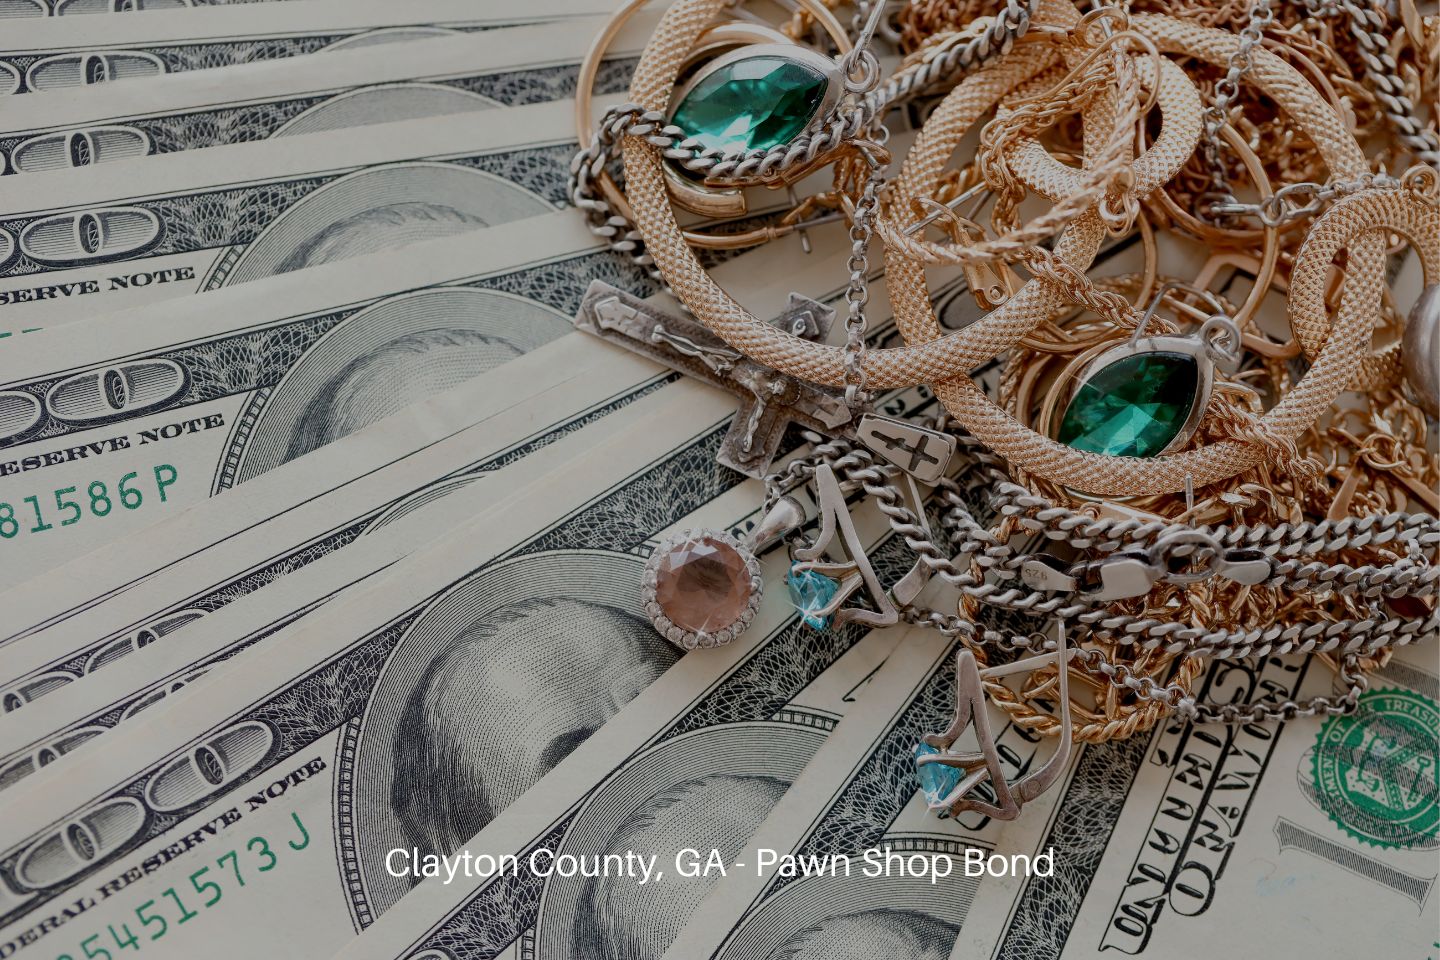 Clayton County, GA - Pawn Shop Bond - Jewelry and dollar bills on white background.